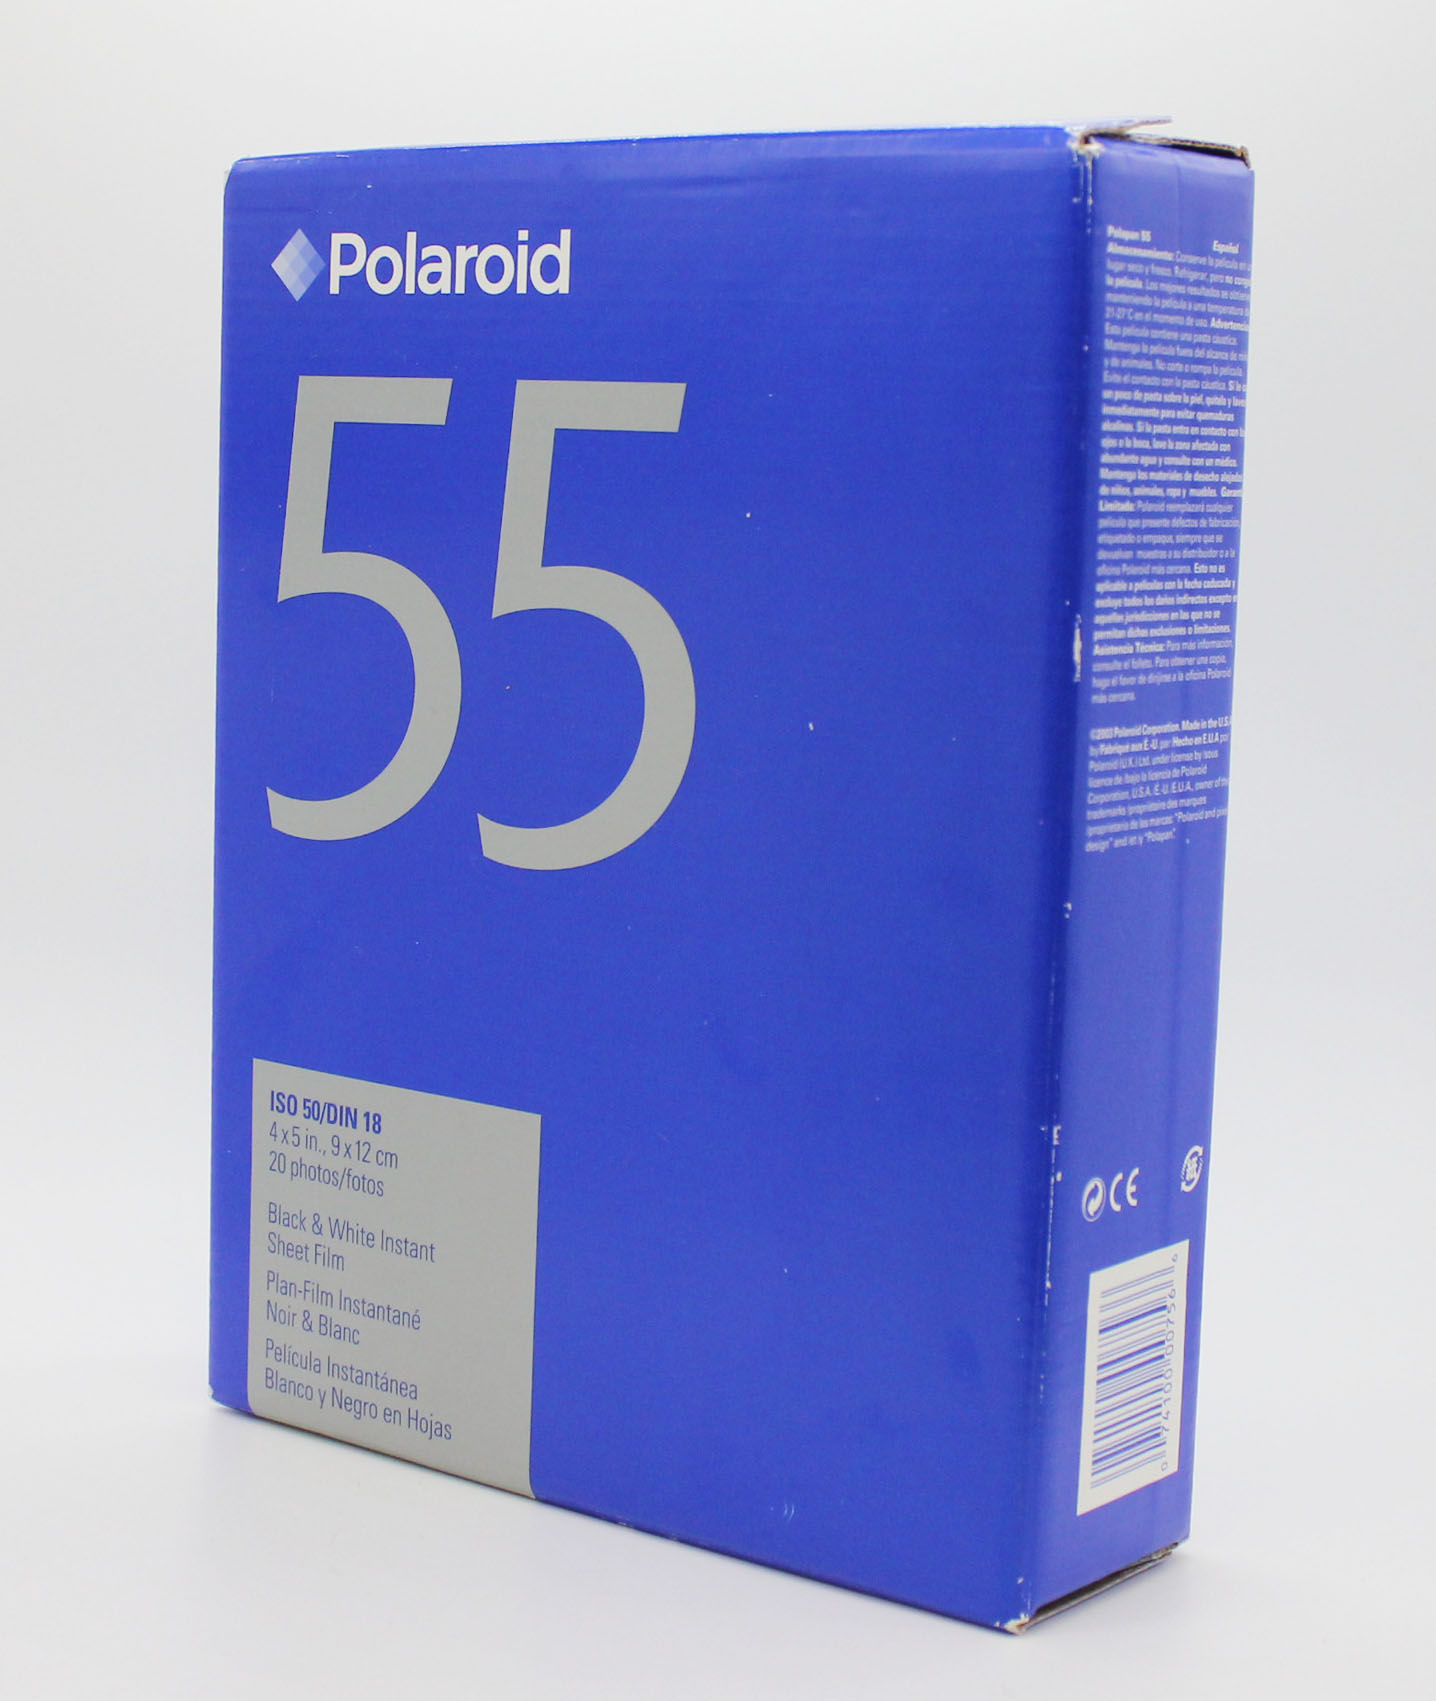  Polaroid 55 4x5in. 9x12cm B&W Black & White Instant Sheet Film 20photos Expired 11/06 from Japan Photo 0